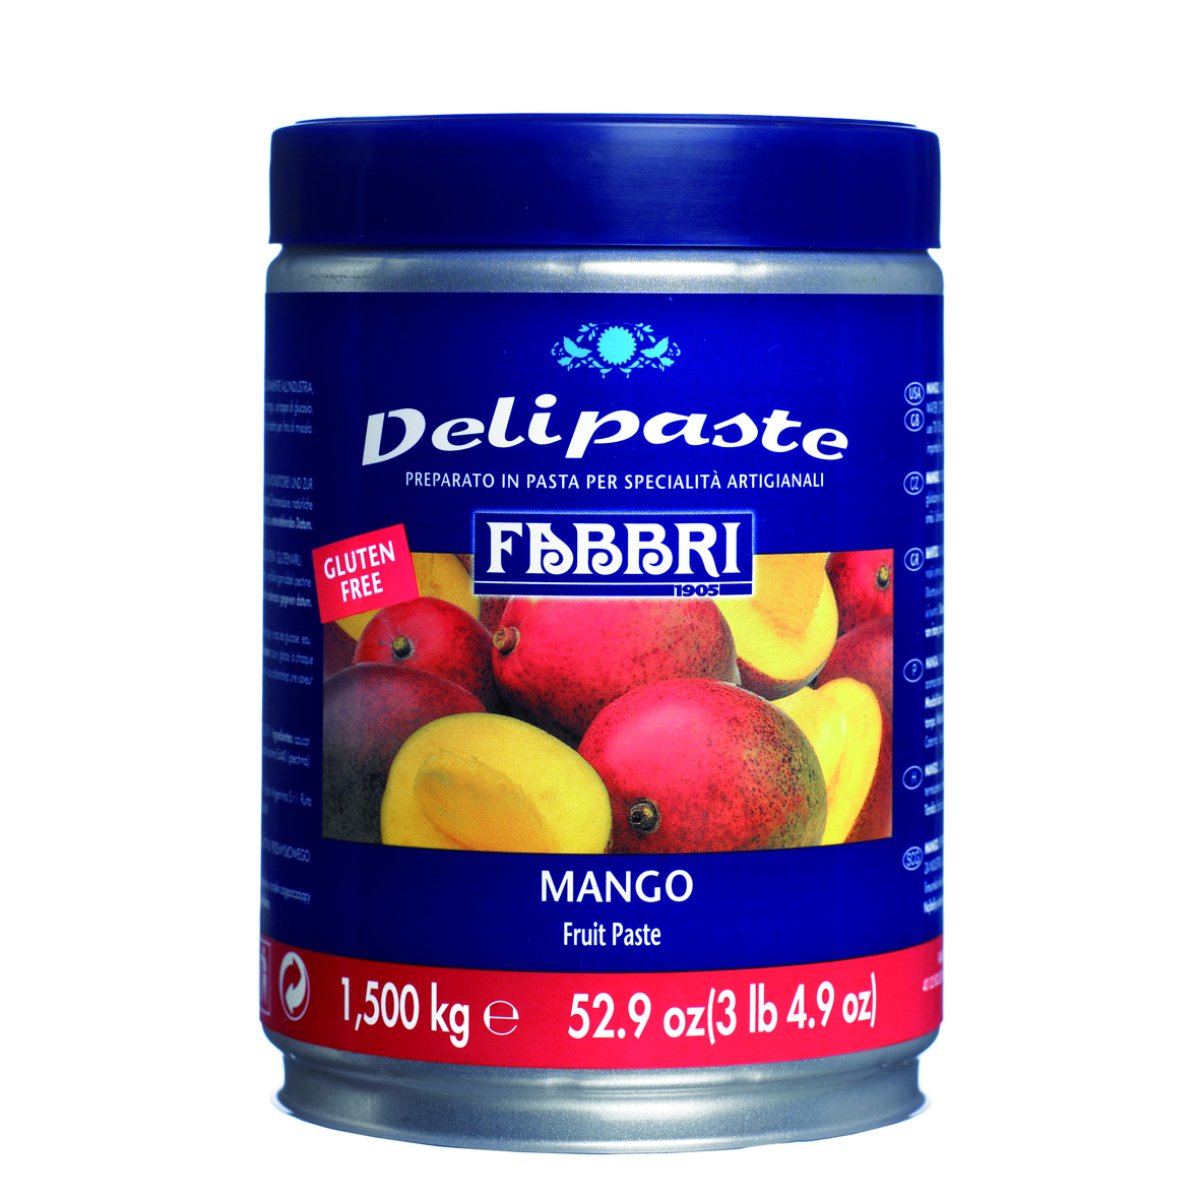 Fabbri Mango Delipaste/Compound - Bake Supply Plus